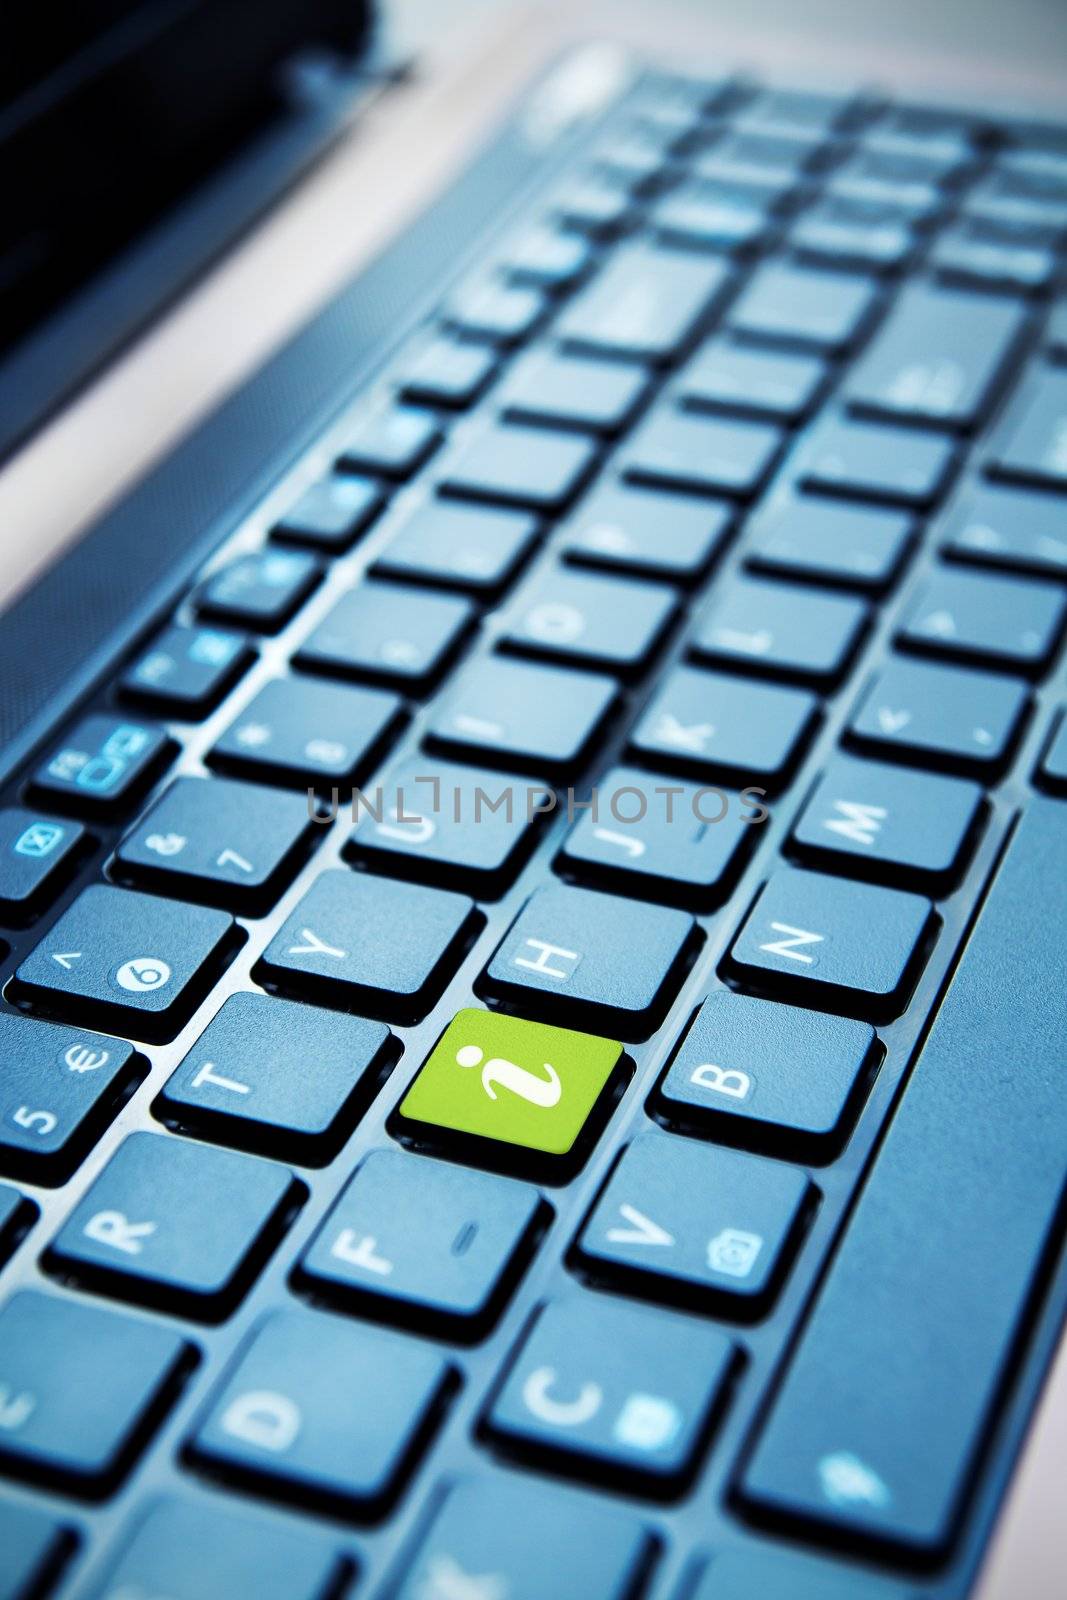 Green info button on computer keyboard